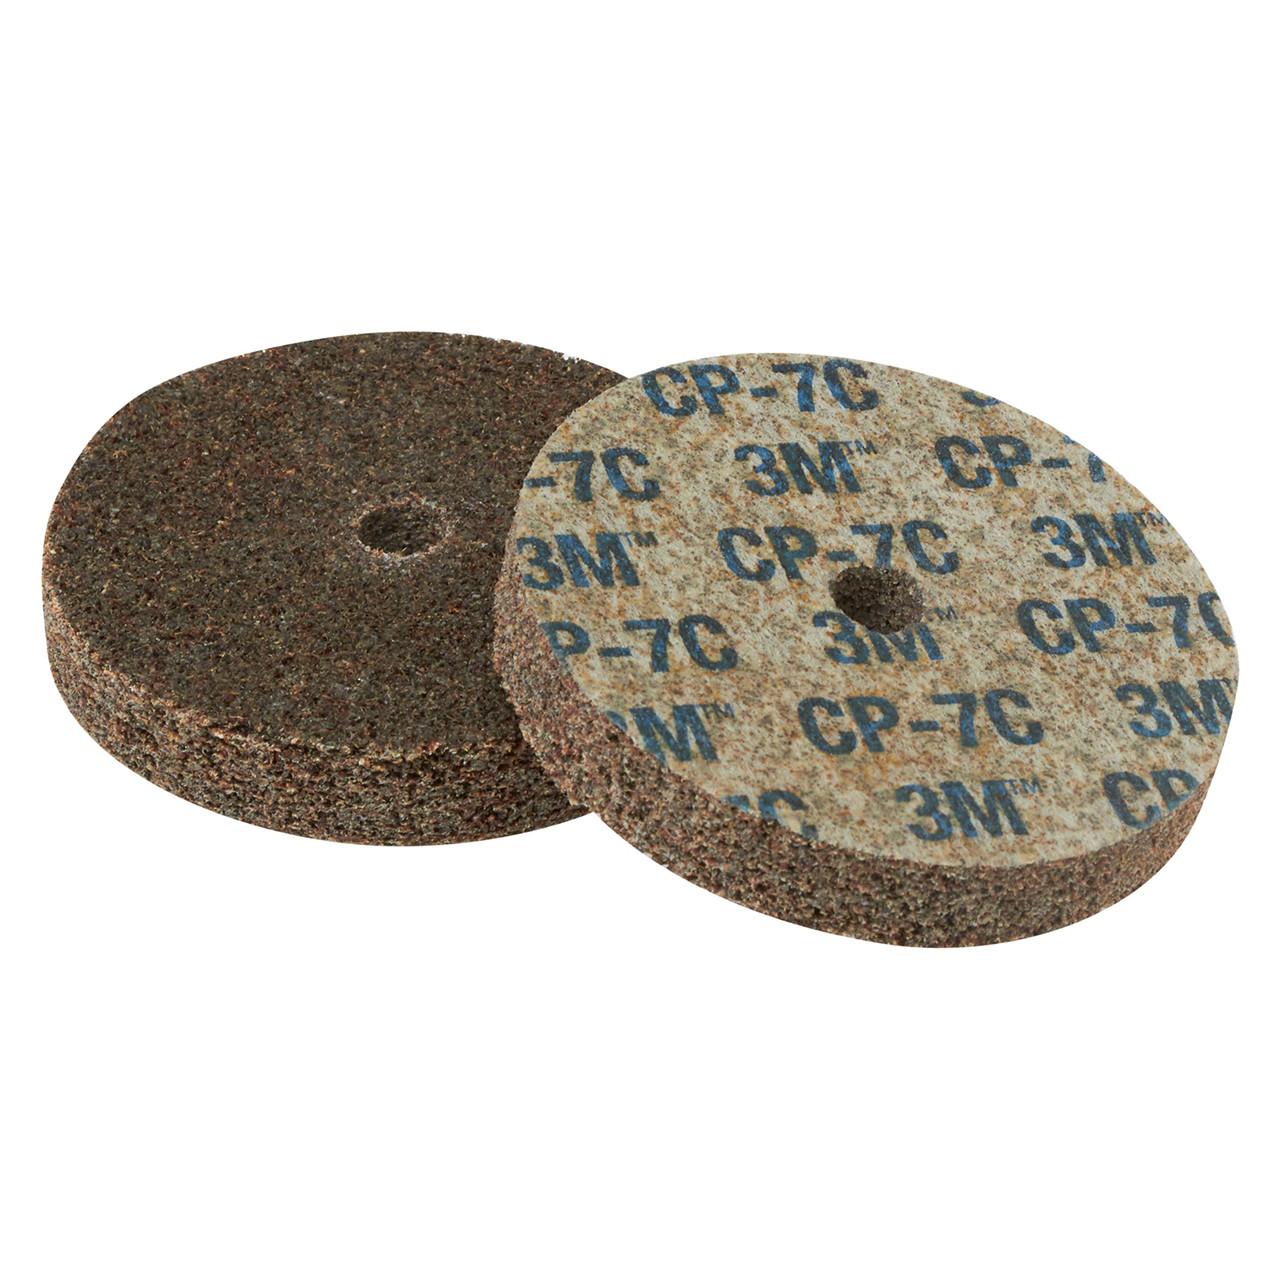 3 inch Diam, 1/8 inch Face Width, 1/4 inch Center Hole, Coarse Grade, Aluminum Oxide Deburring Wheel